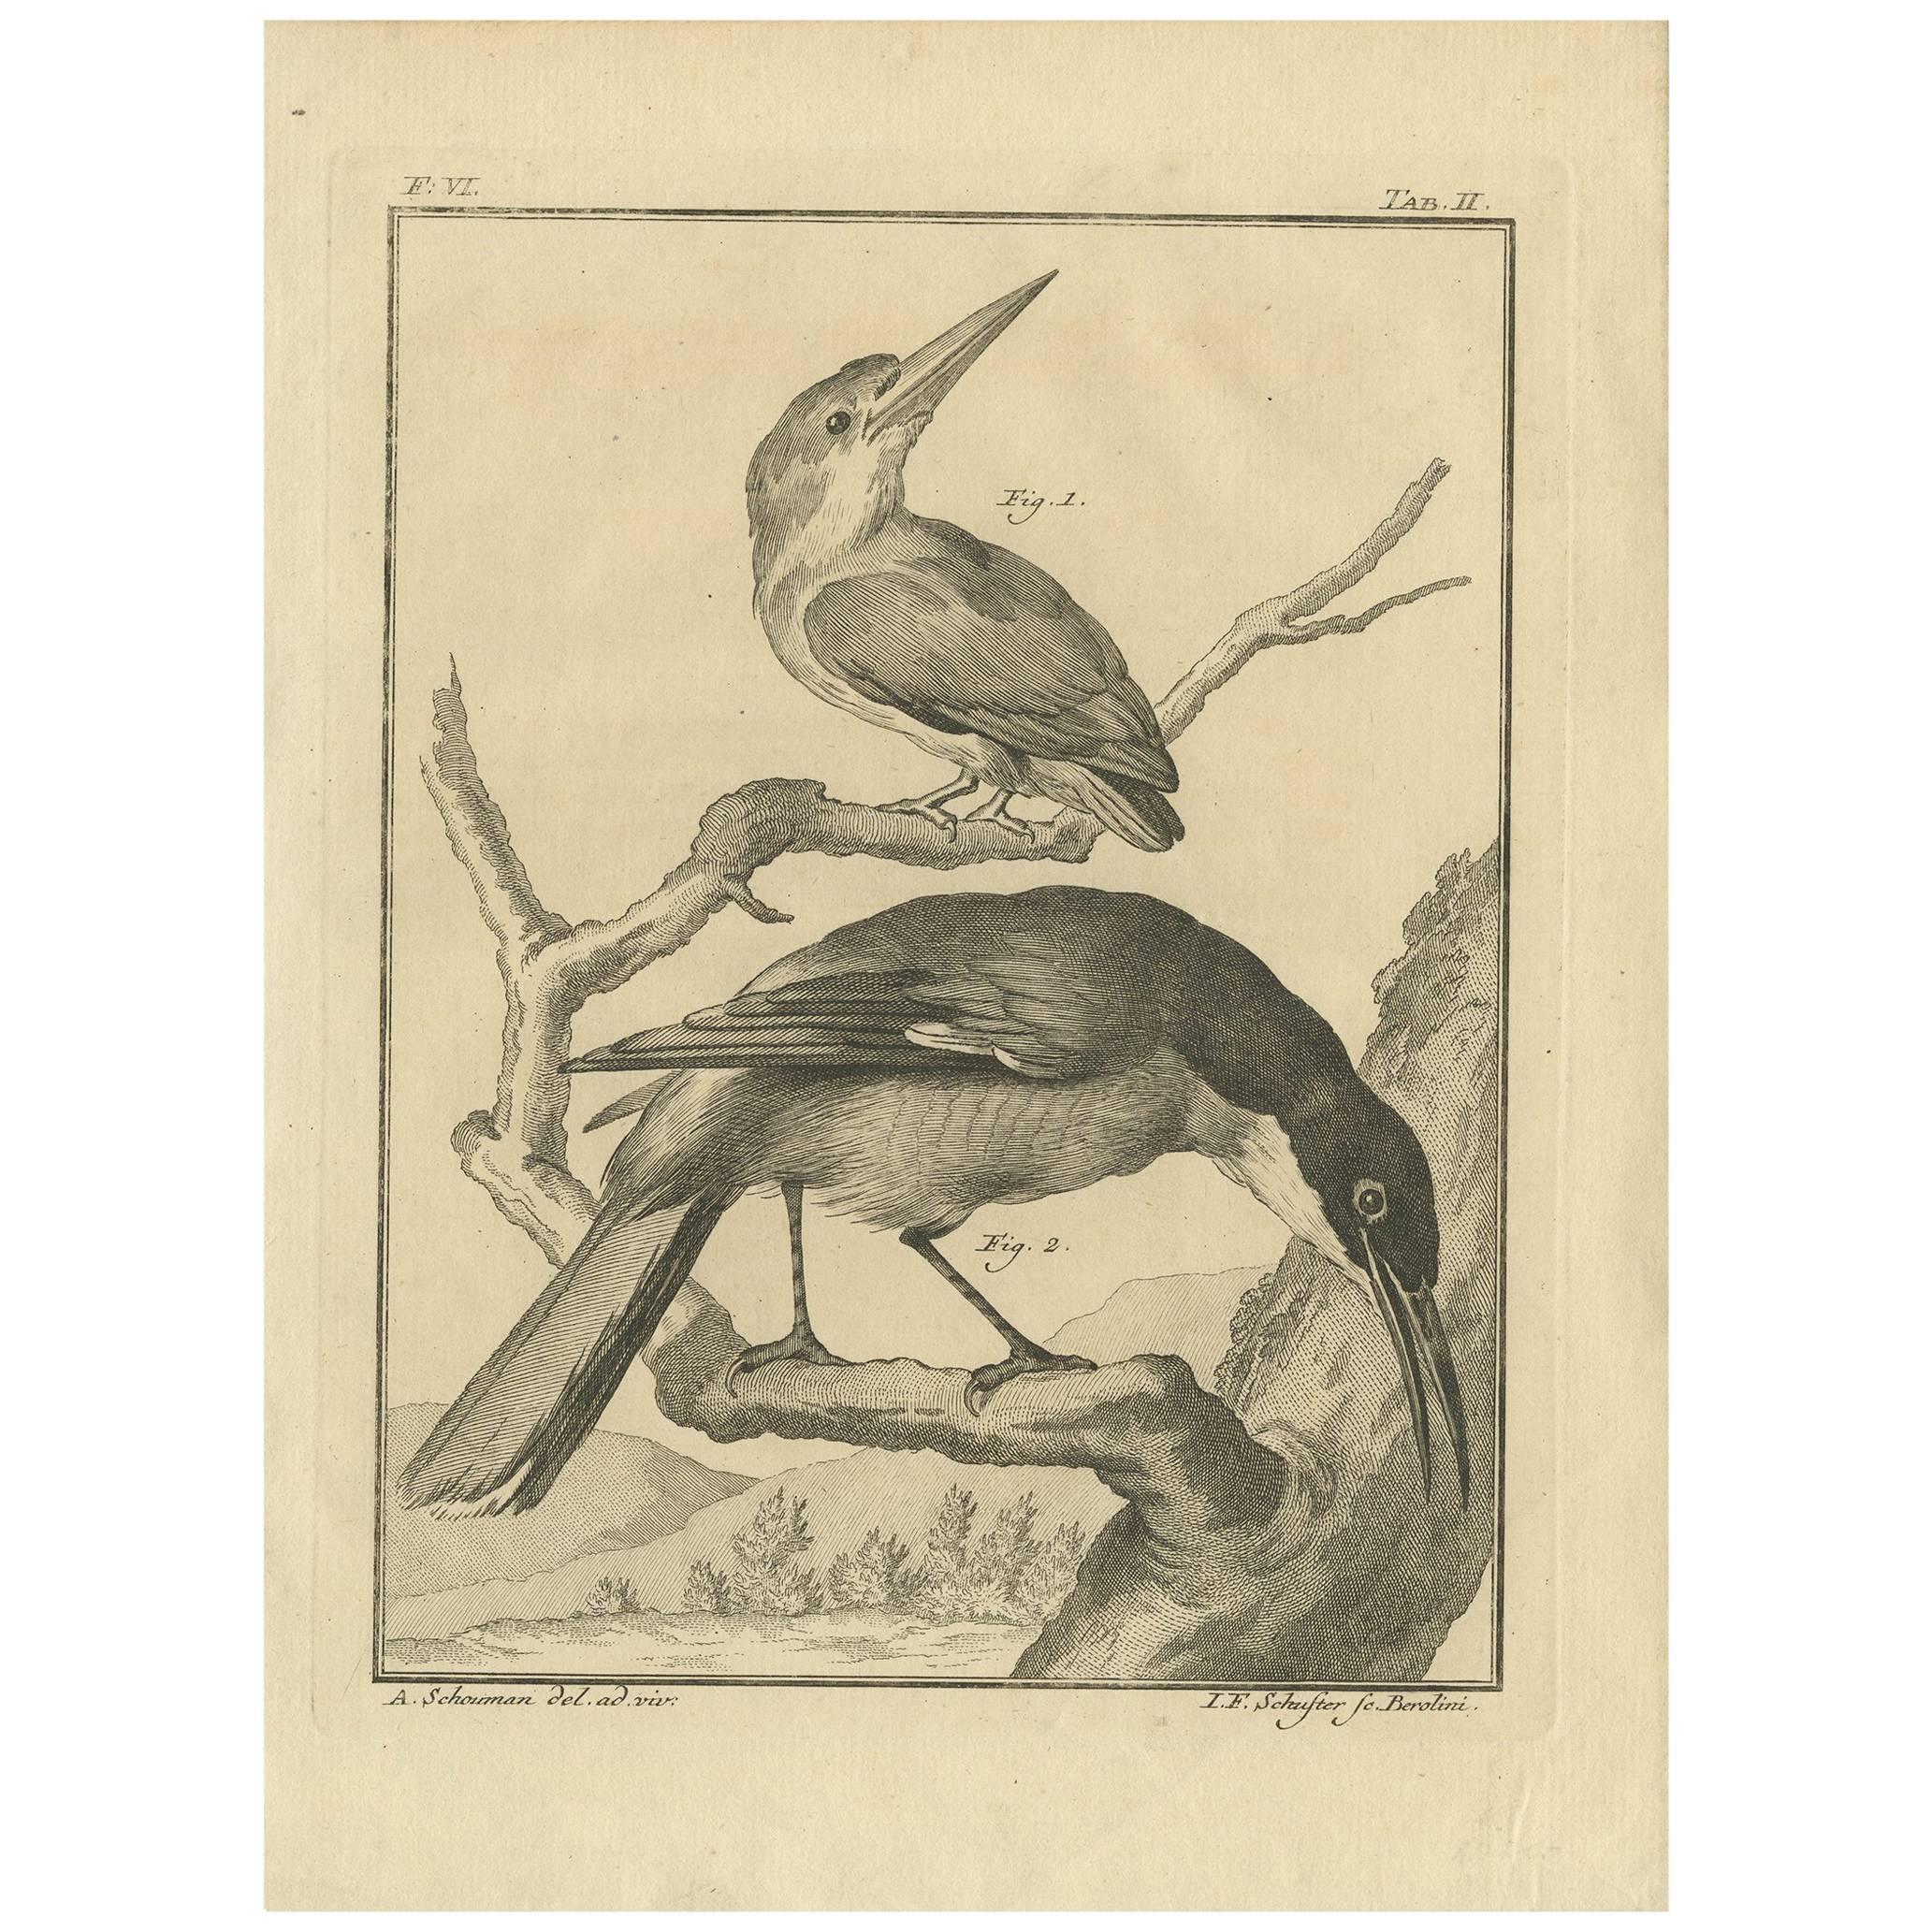 Antique Animal Print Illustrating Two Birds, circa 1790